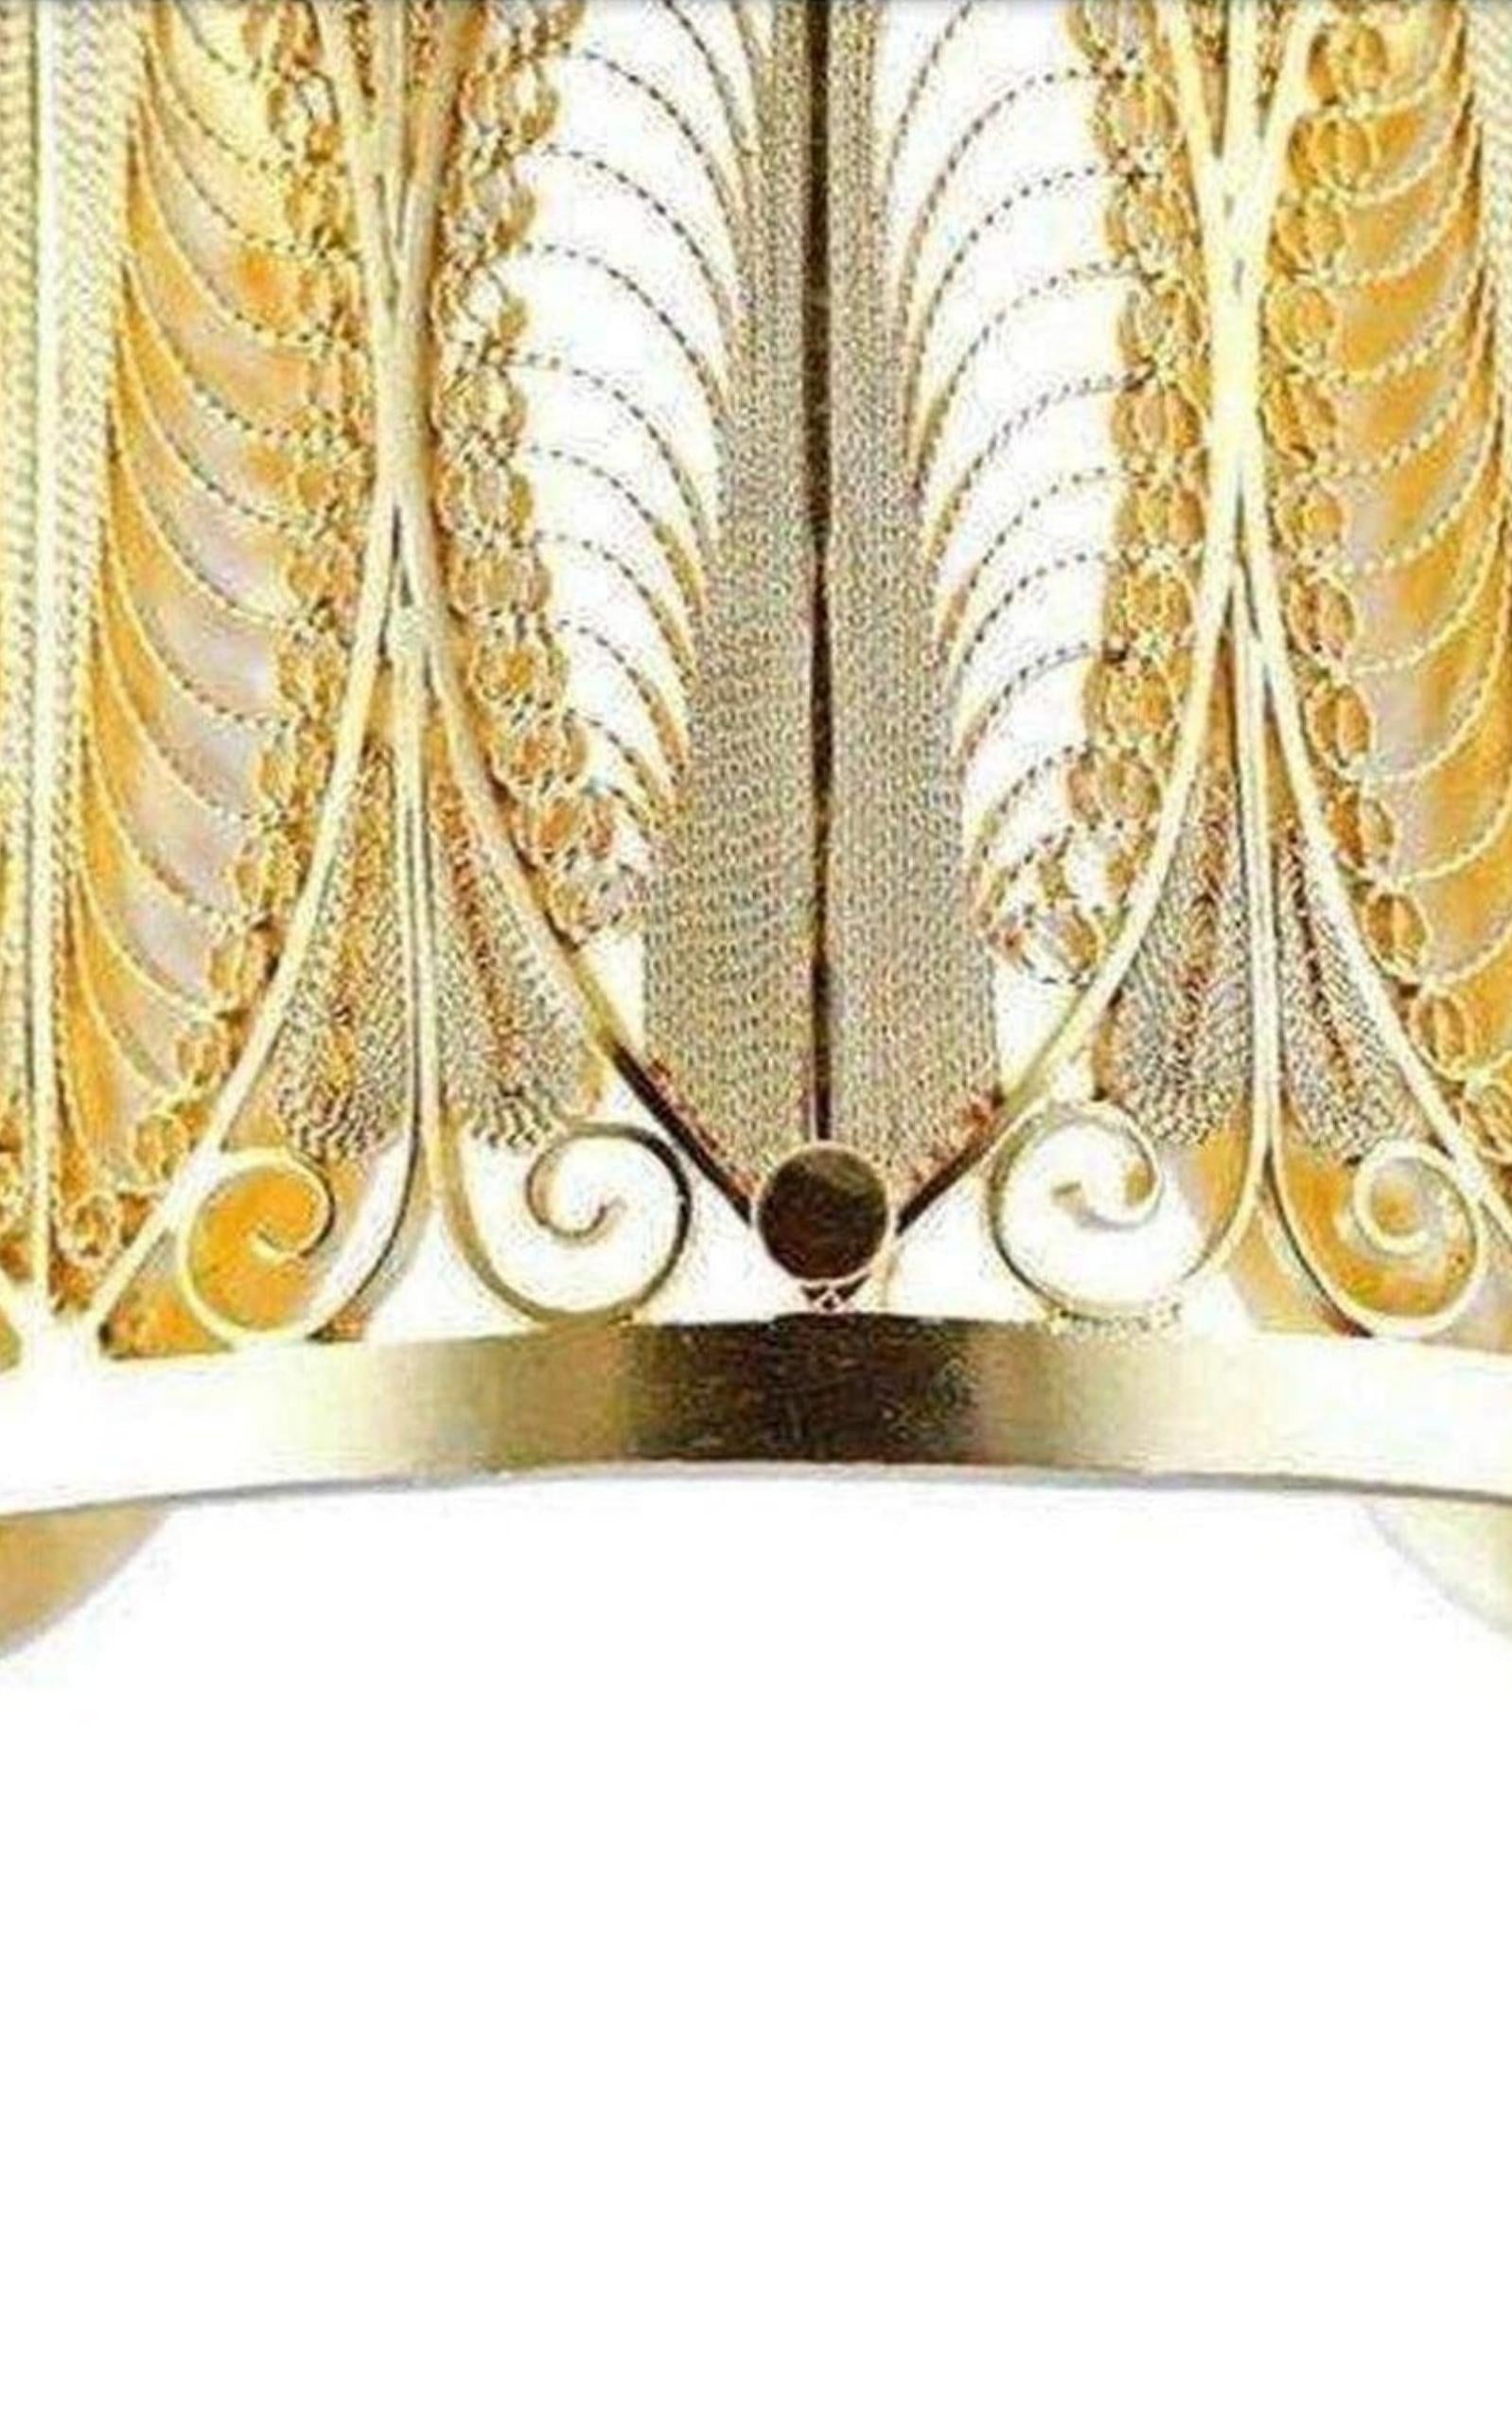  MallarinoFanny Sterling Silver And 24K Gold Vermeil Cuff Bracelet - Runway Catalog